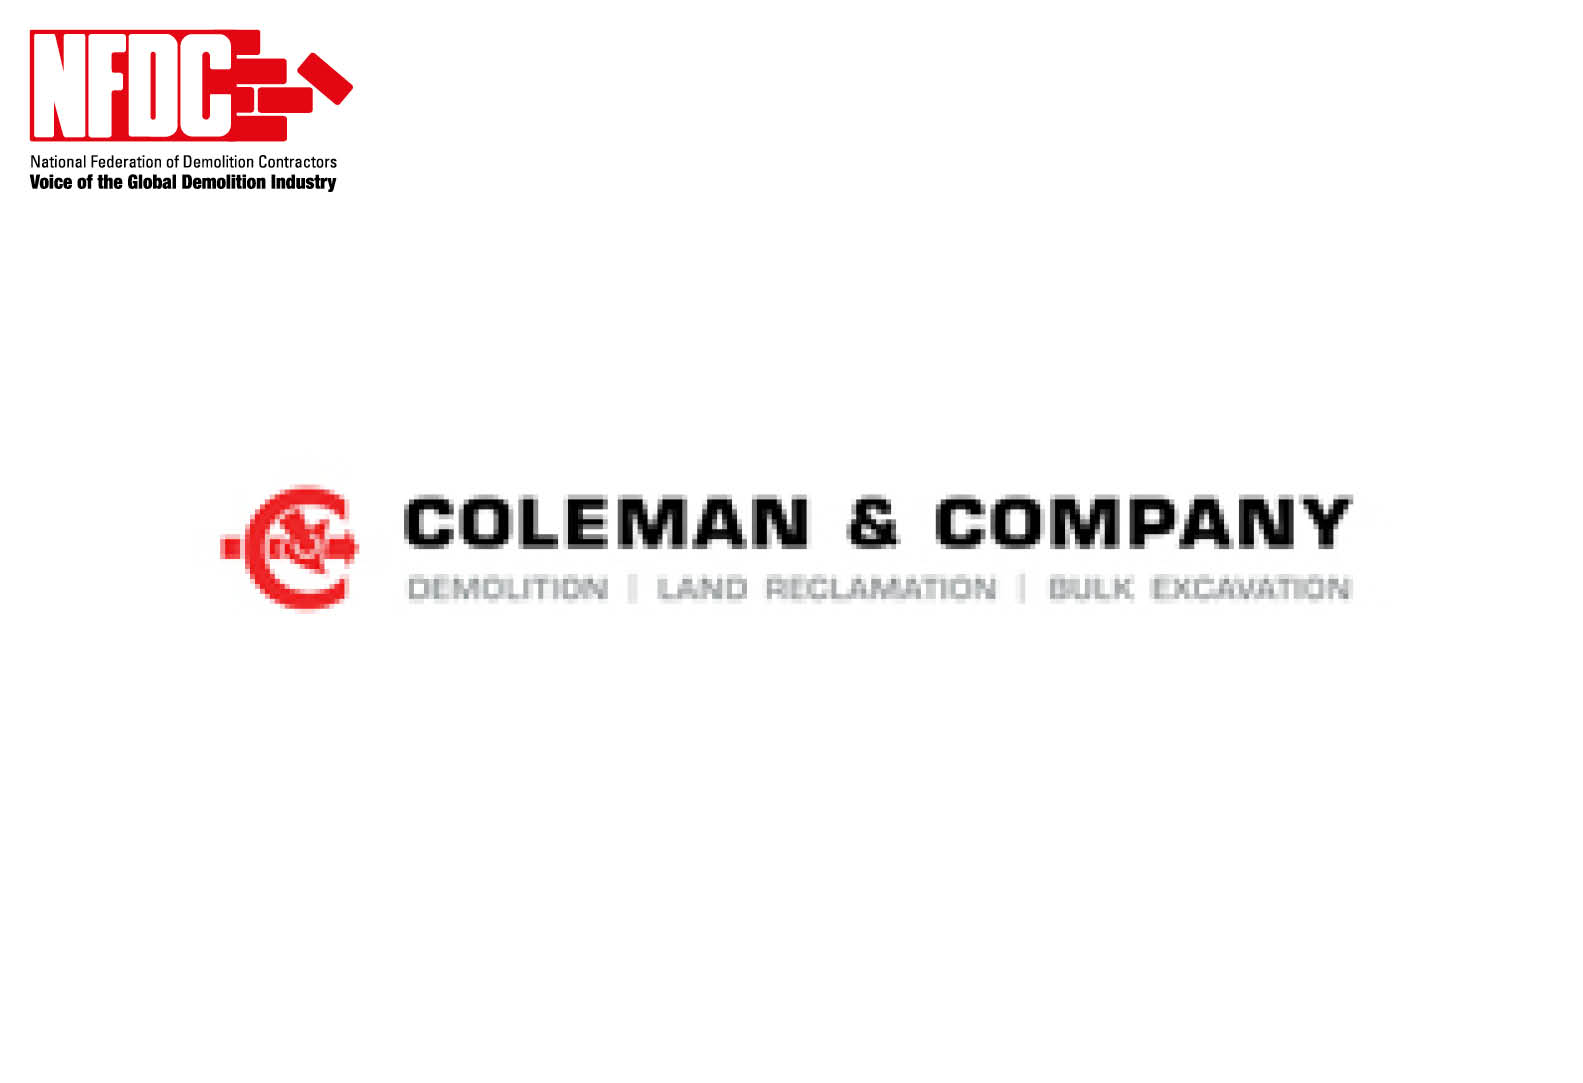 Coleman & Company